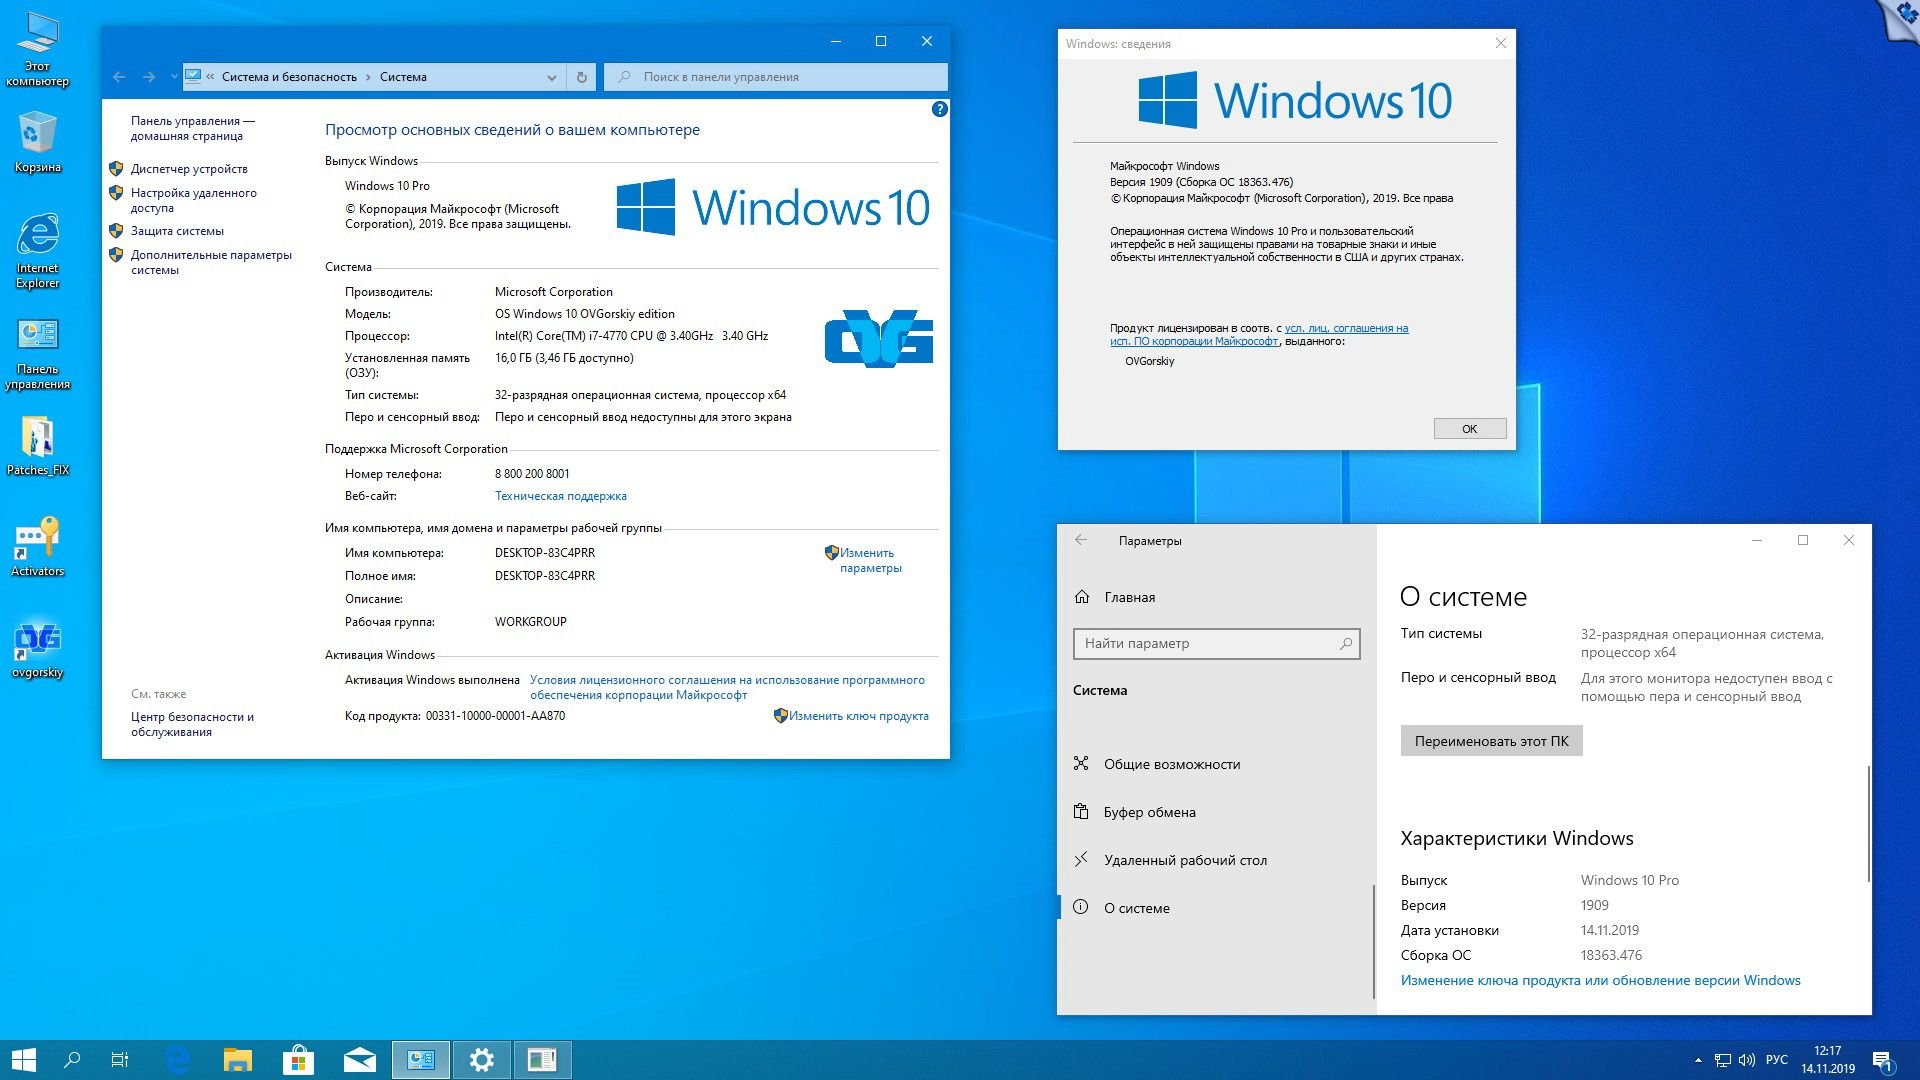 Виндовс 10 информация. Виндовс 10. О системе Windows 10. Операционная система Windows 10 Pro x64. Windows 10 Pro система.